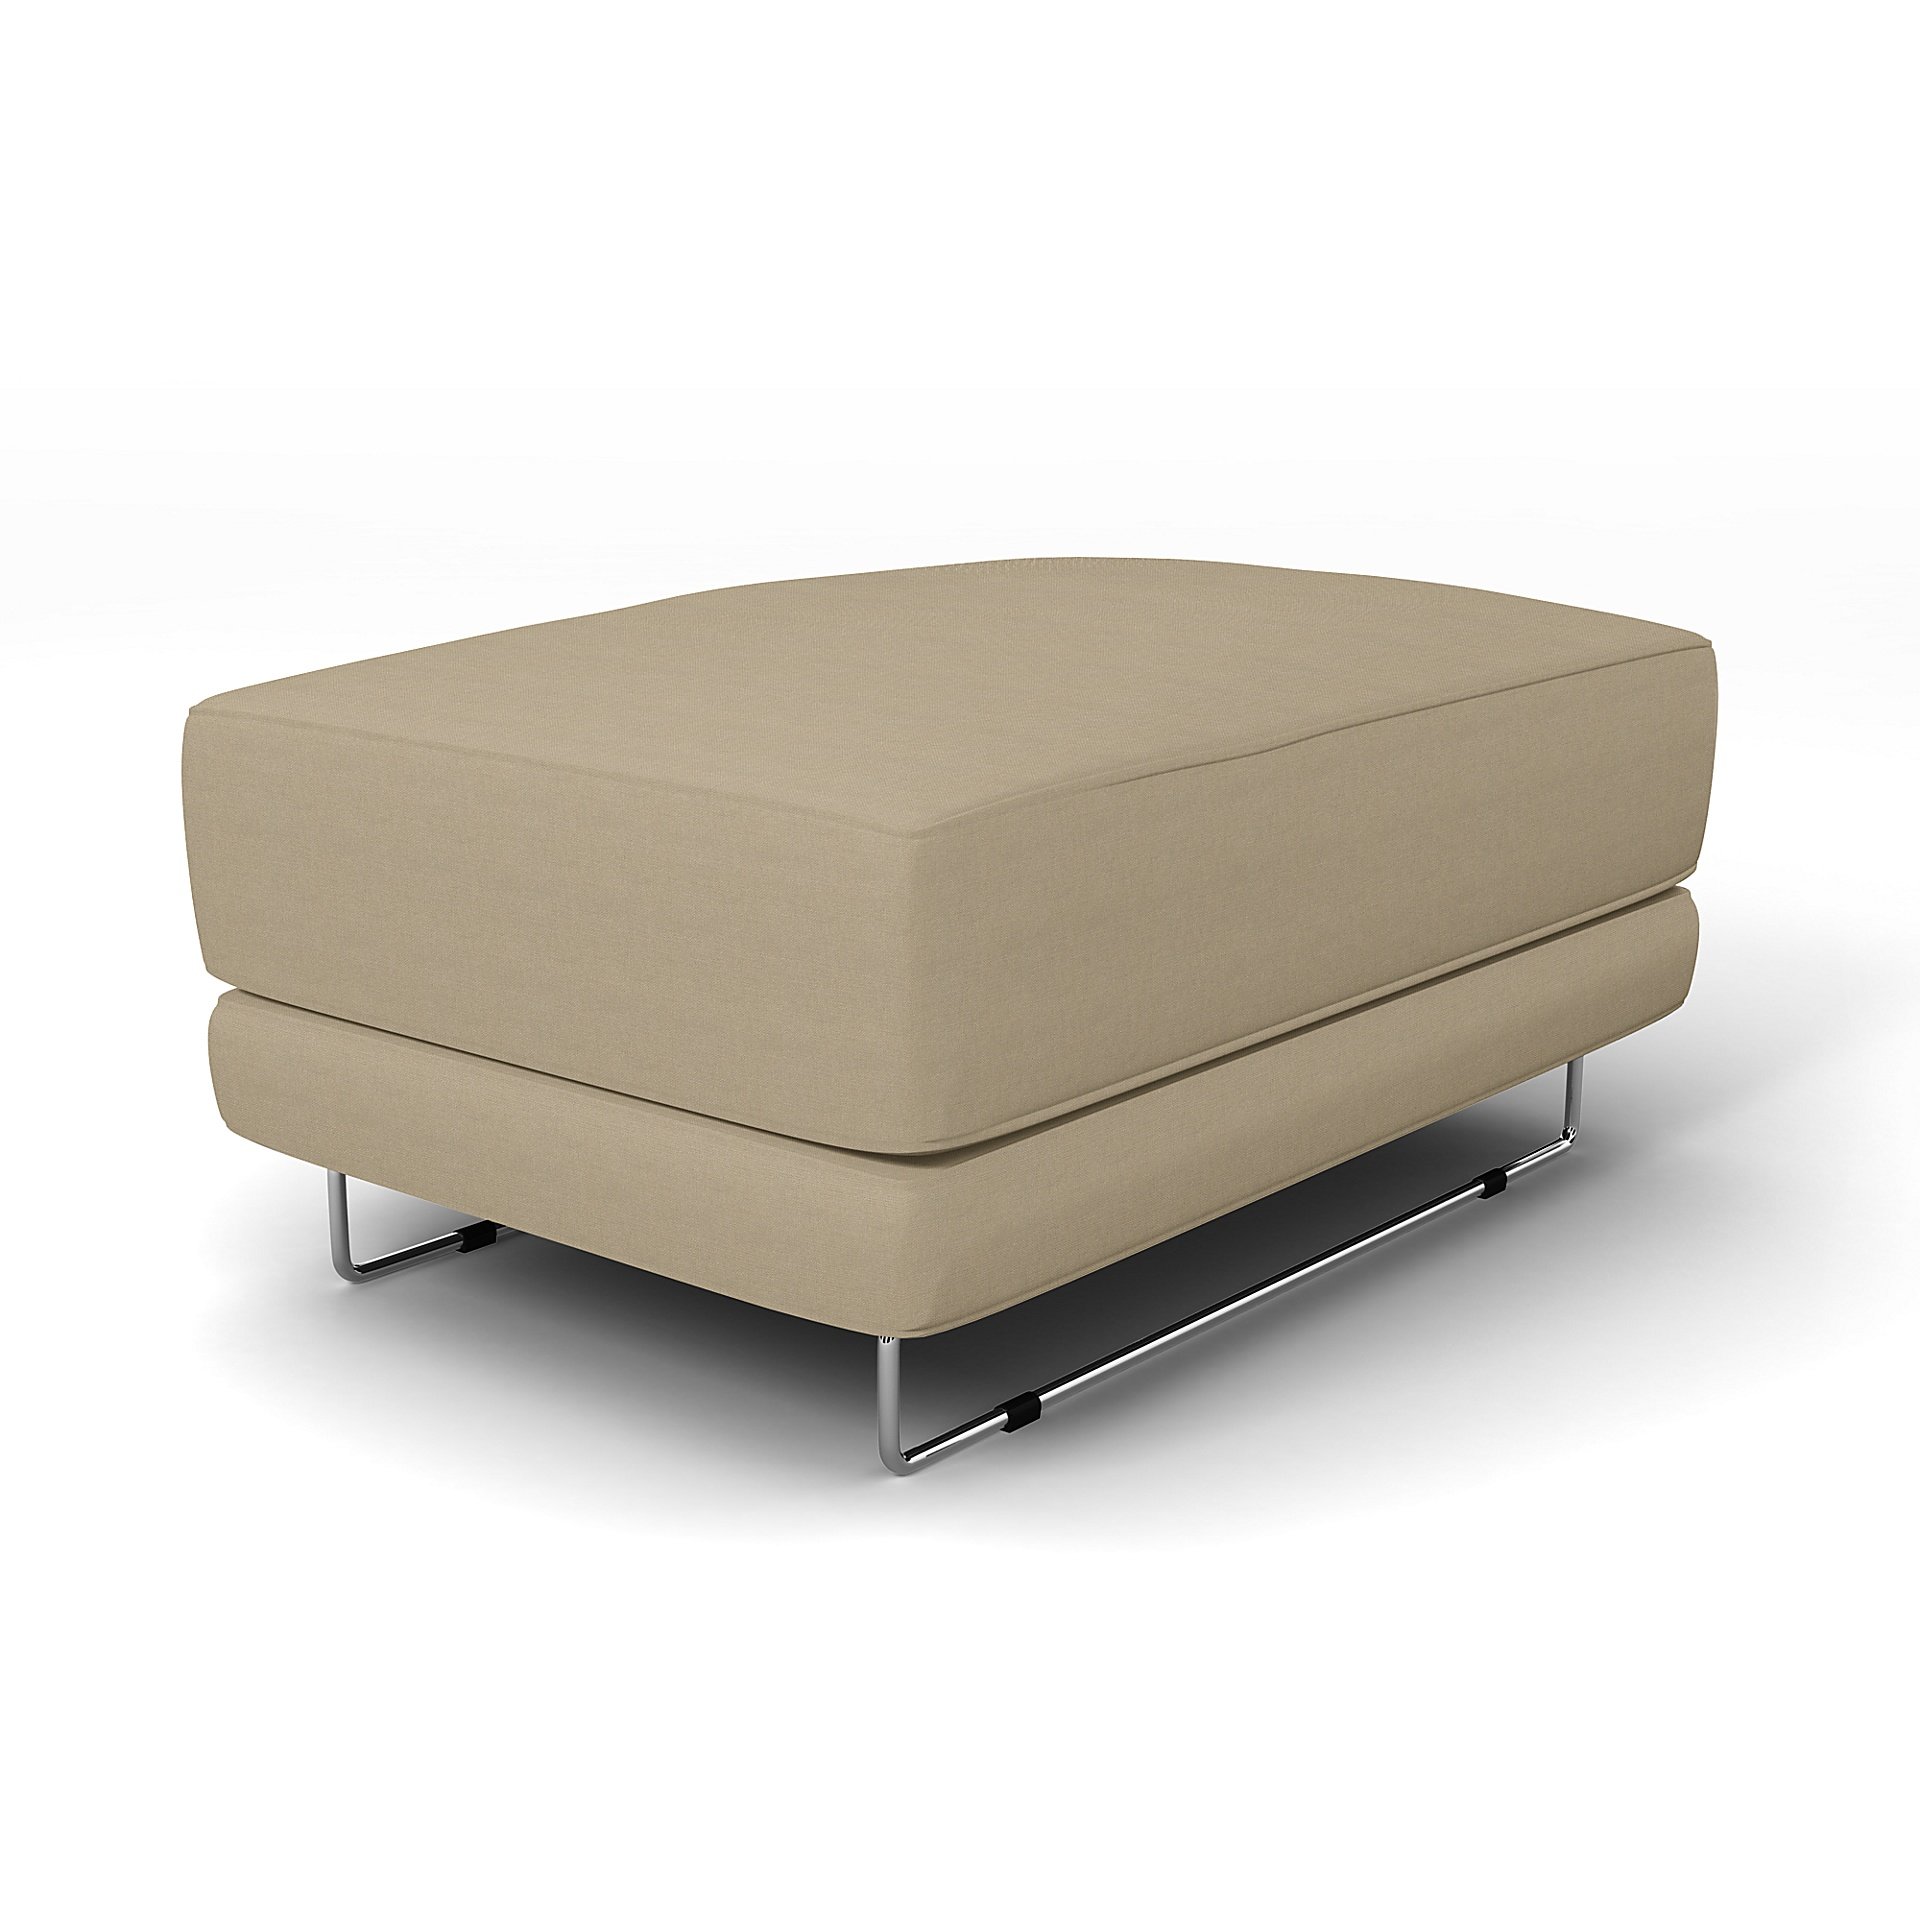 IKEA - Tylosand Footstool Cover, Tan, Linen - Bemz